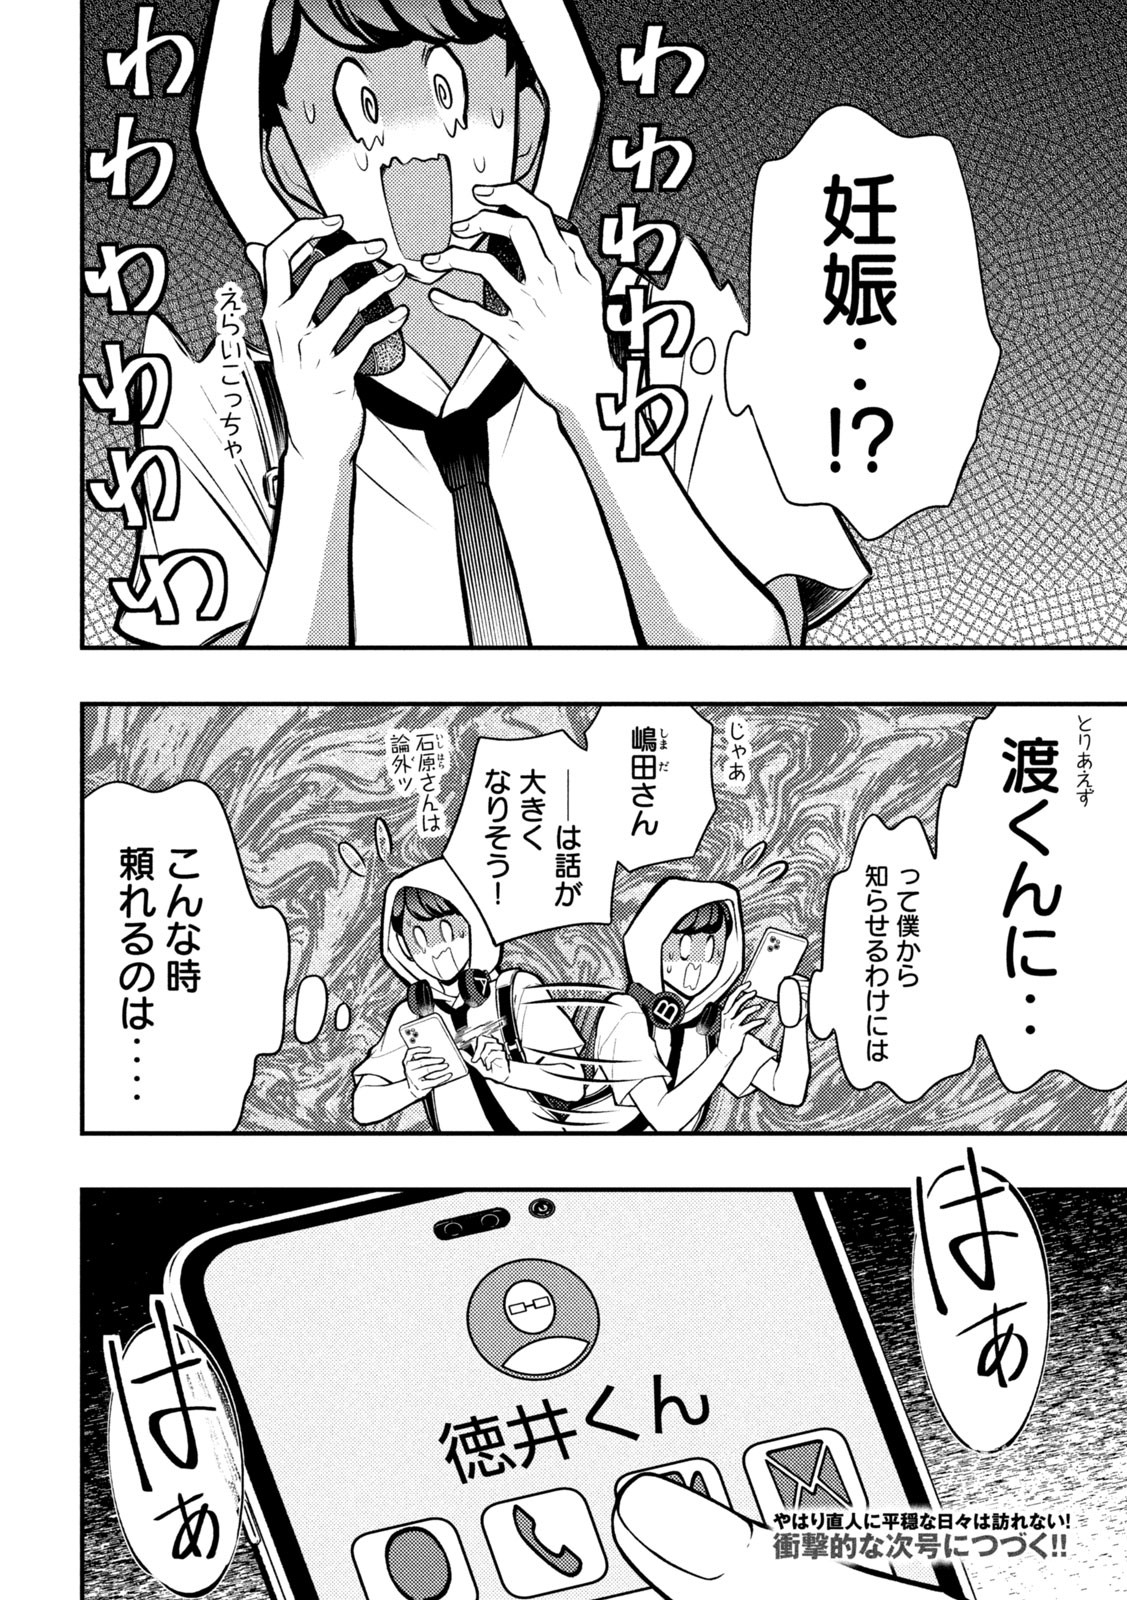 Watari-kun no xx ga Houkai Sunzen - Chapter 82 - Page 38